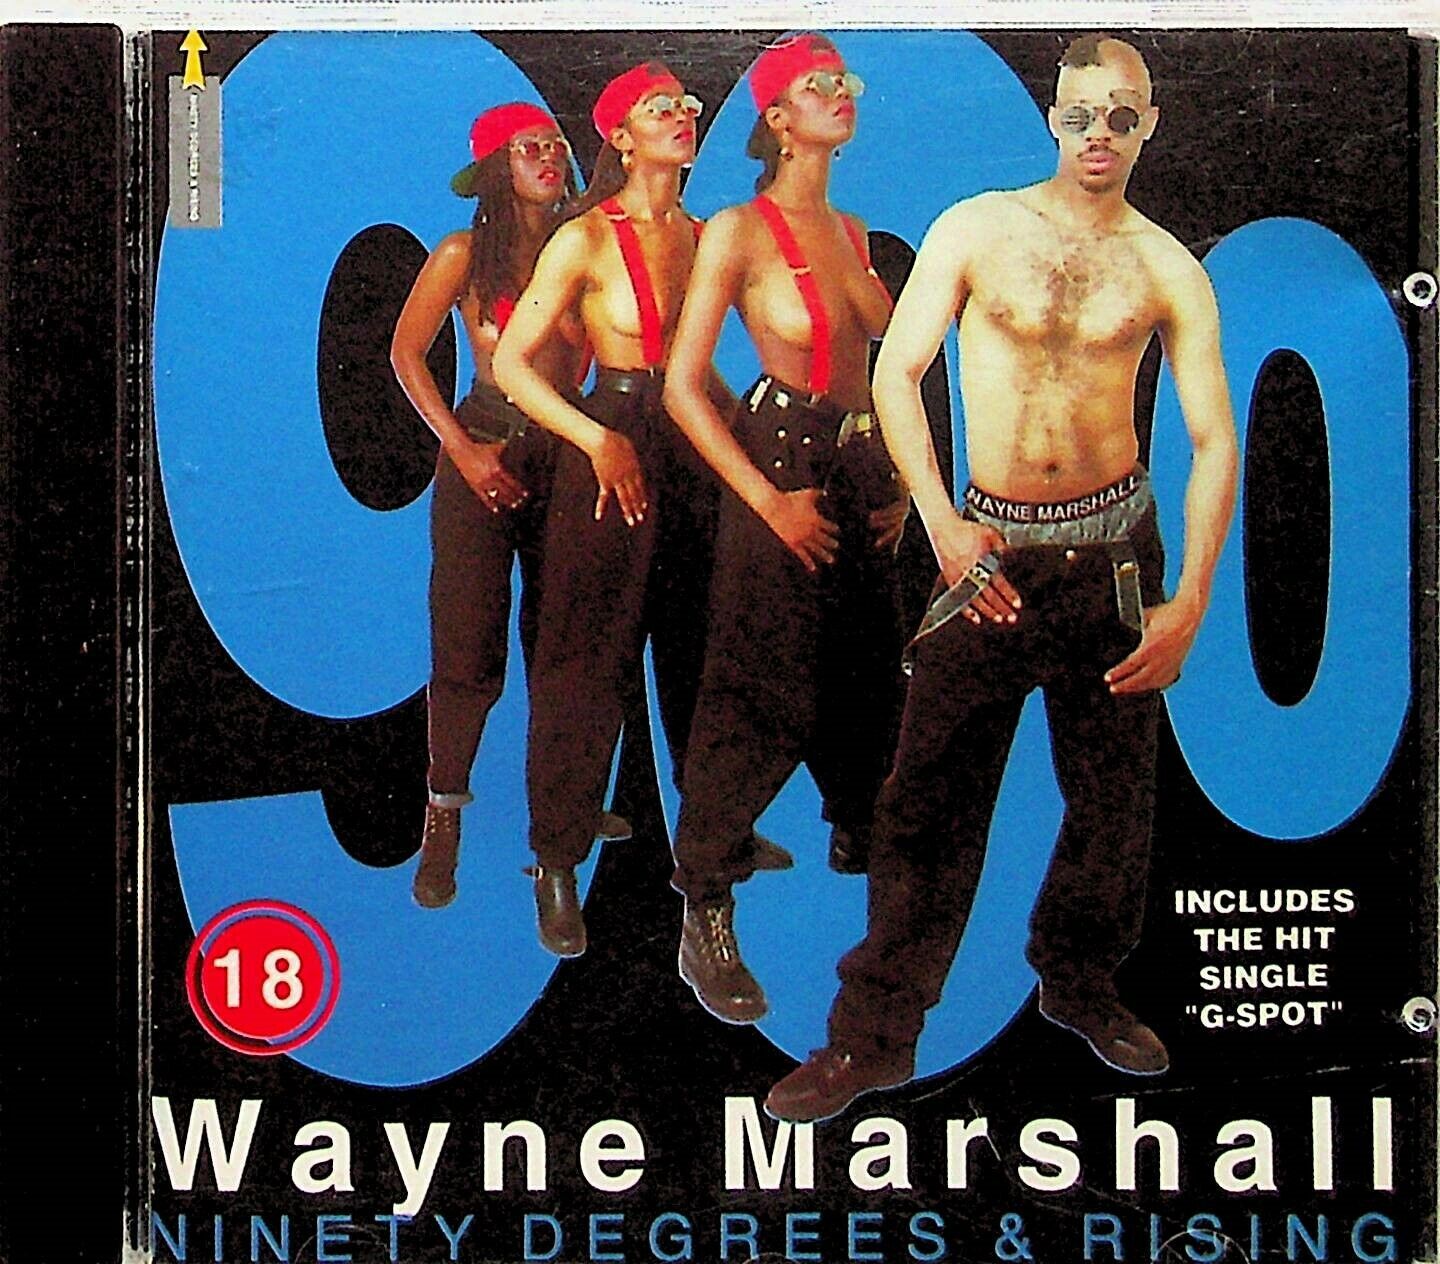 Wayne Marshall -Ninety Degrees & Rising CD -1994 (90s R&B/Hip-Hop/G-Spot) 